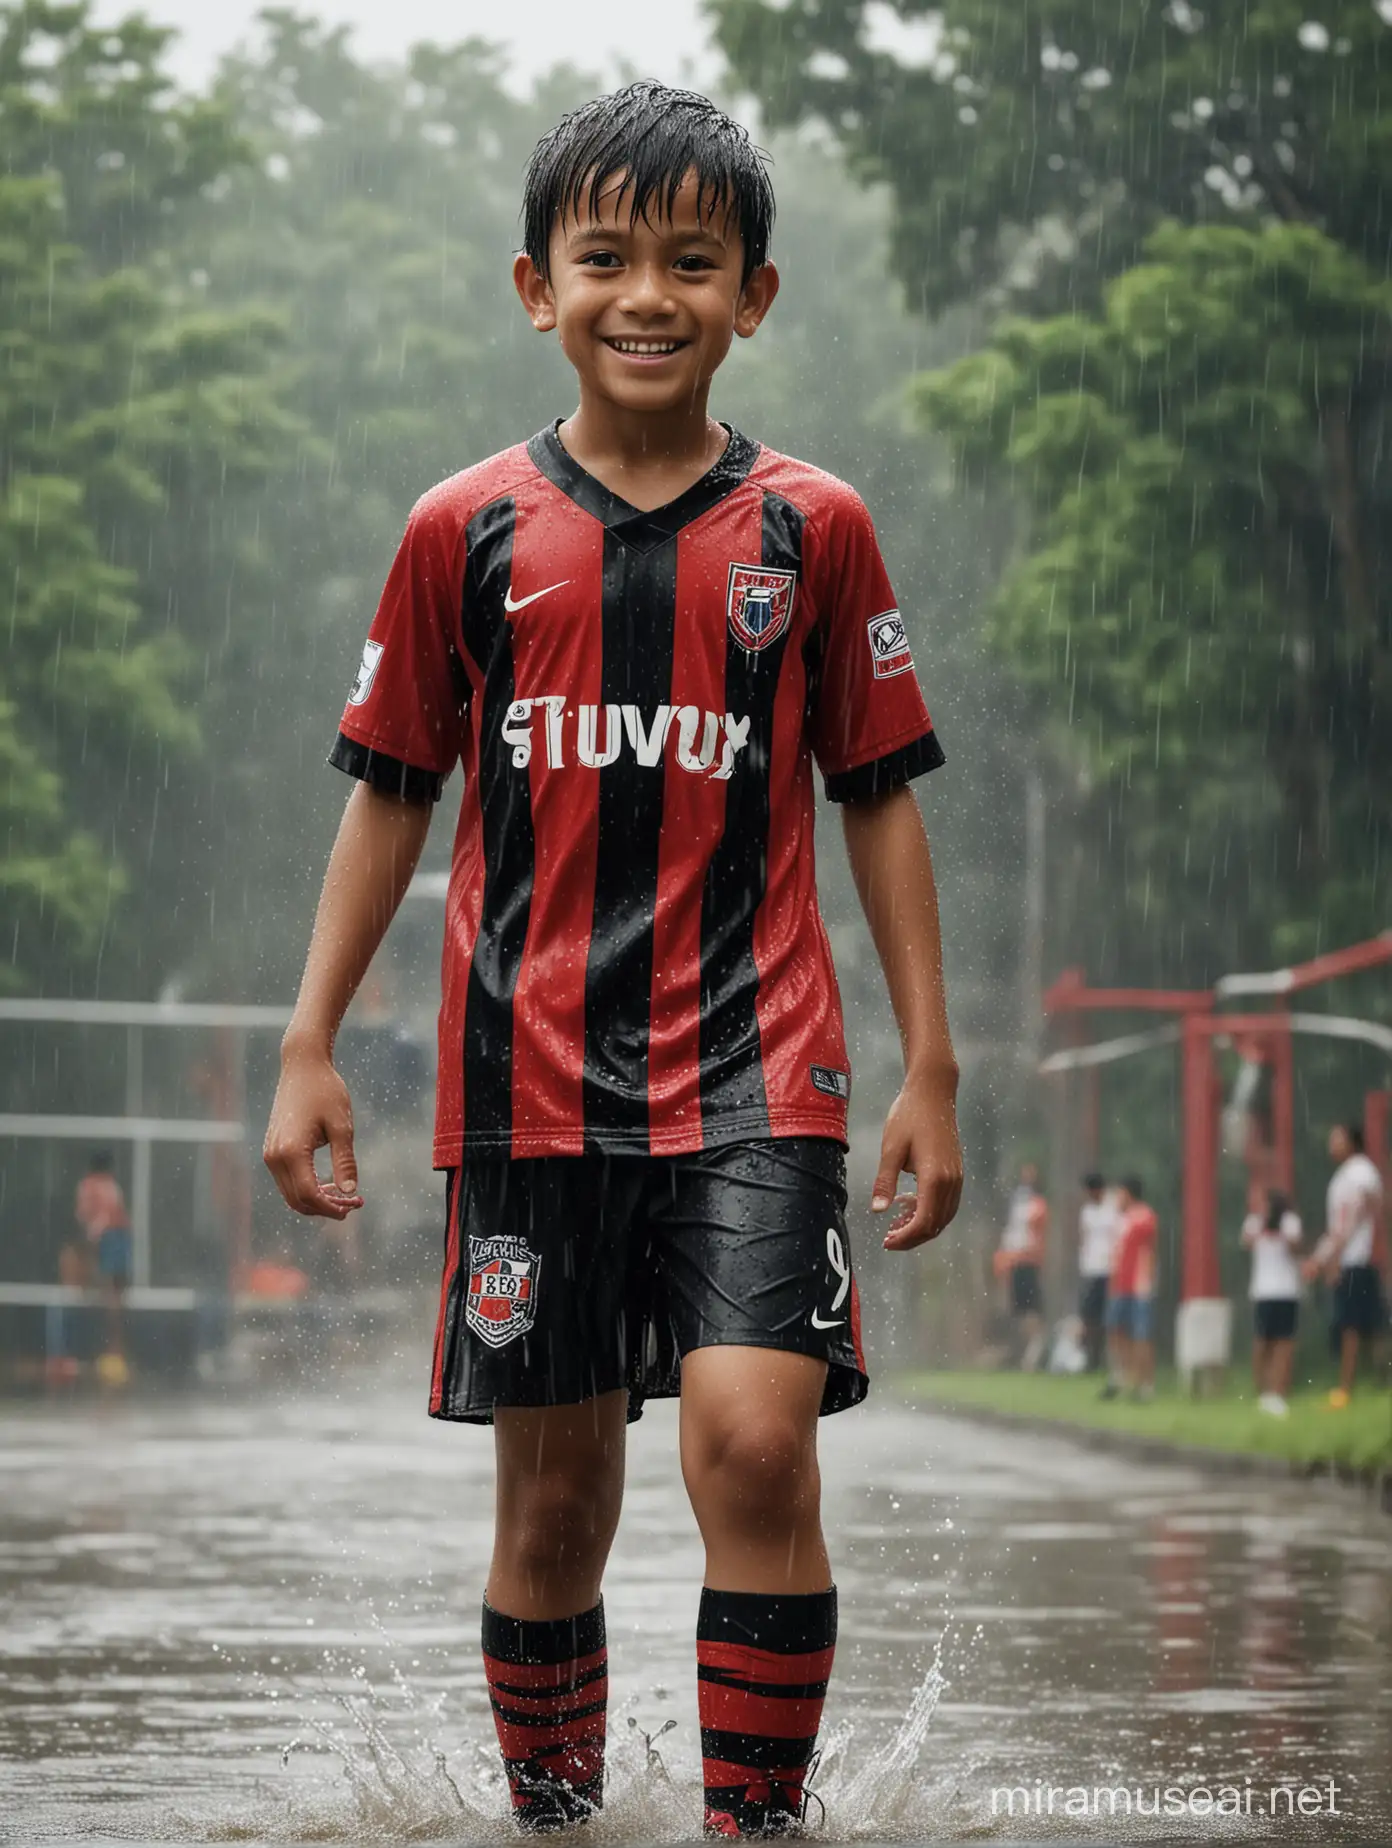 Gambar hiperrealisme seorang anak laki-laki Indonesia tampan berusia 9 tahun berdiri di bawah hujan lebat. memakai jersey warna merah garis hitam dengan nomor 7 , sepatu sepakbola NIKE, Dia menatap ke arah kamera sambil tersenyum beekacak pinggang, salah satu kakinya menginjak bola, Pemandangan dari depan. Anda bisa melihat air memercikkan seluruh tubuhnya. Latar belakang lapangan sepakbola dengan detail yang terlihat begitu nyata